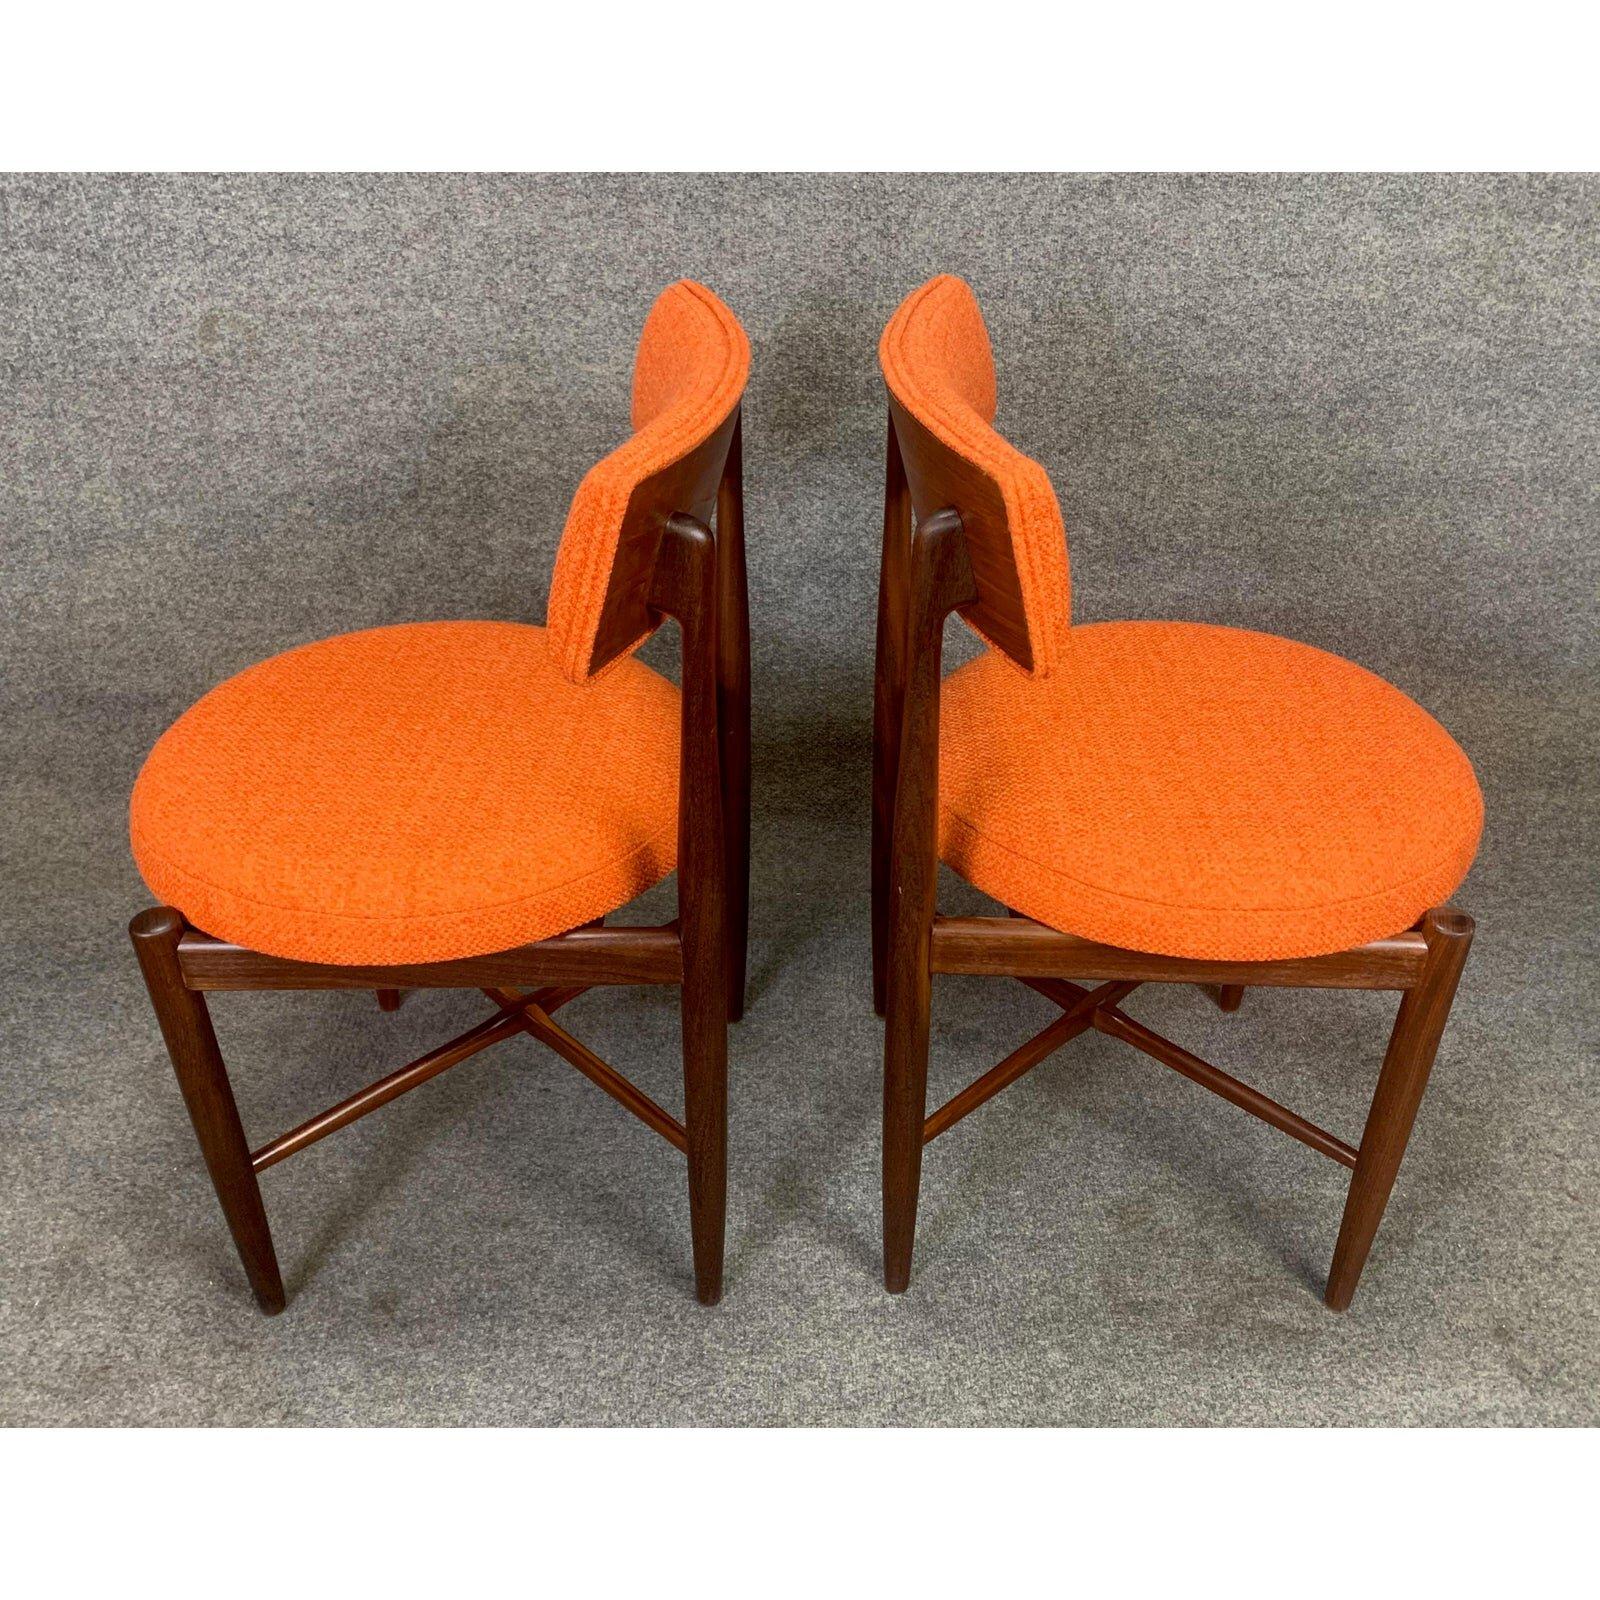 Pair of Vintage British Mid Century Modern Teak Accent Chairs by G Plan 1